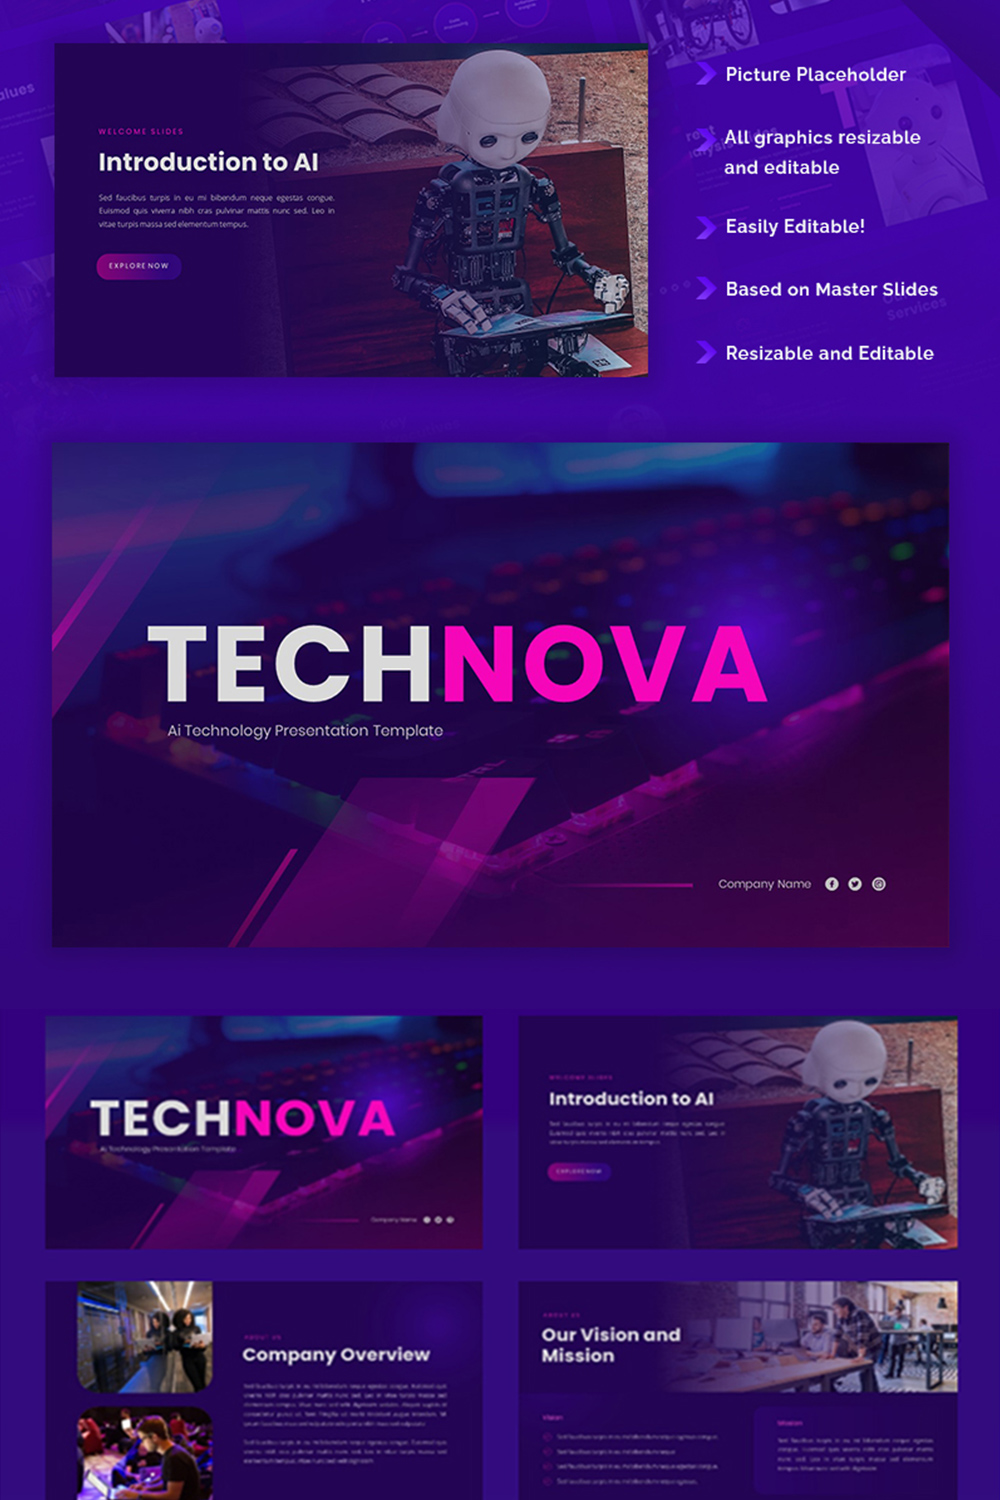 Technova - AI Technology Google Slides Template pinterest preview image.